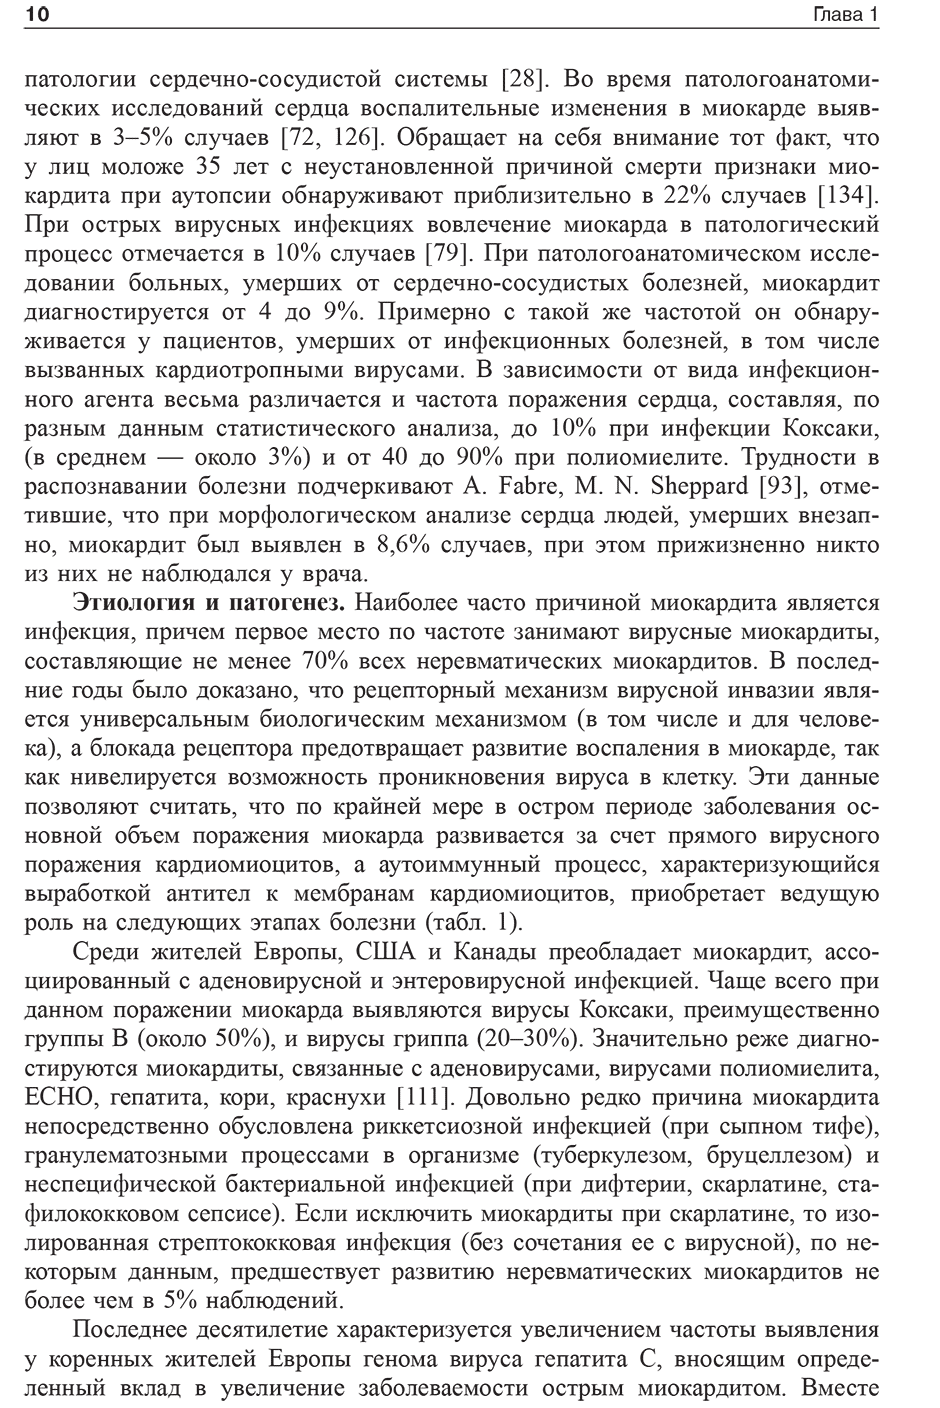 Пример страницы из книги "Заболевания миокарда, эндокарда и перикарда" - Свистунов А. А.